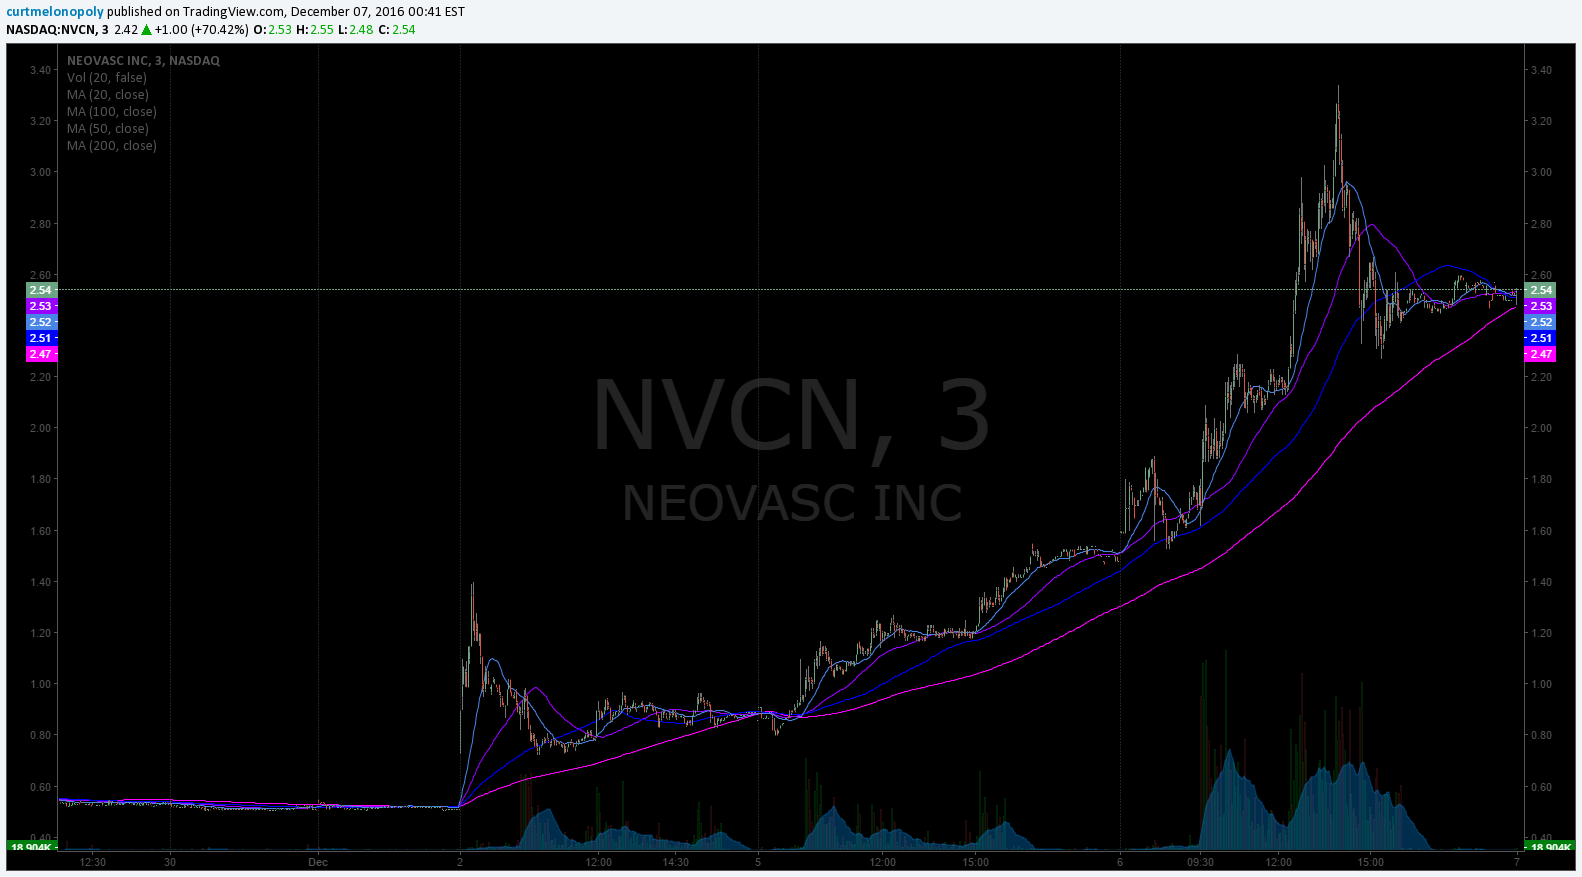 $NVCN, Stock, Watchlist